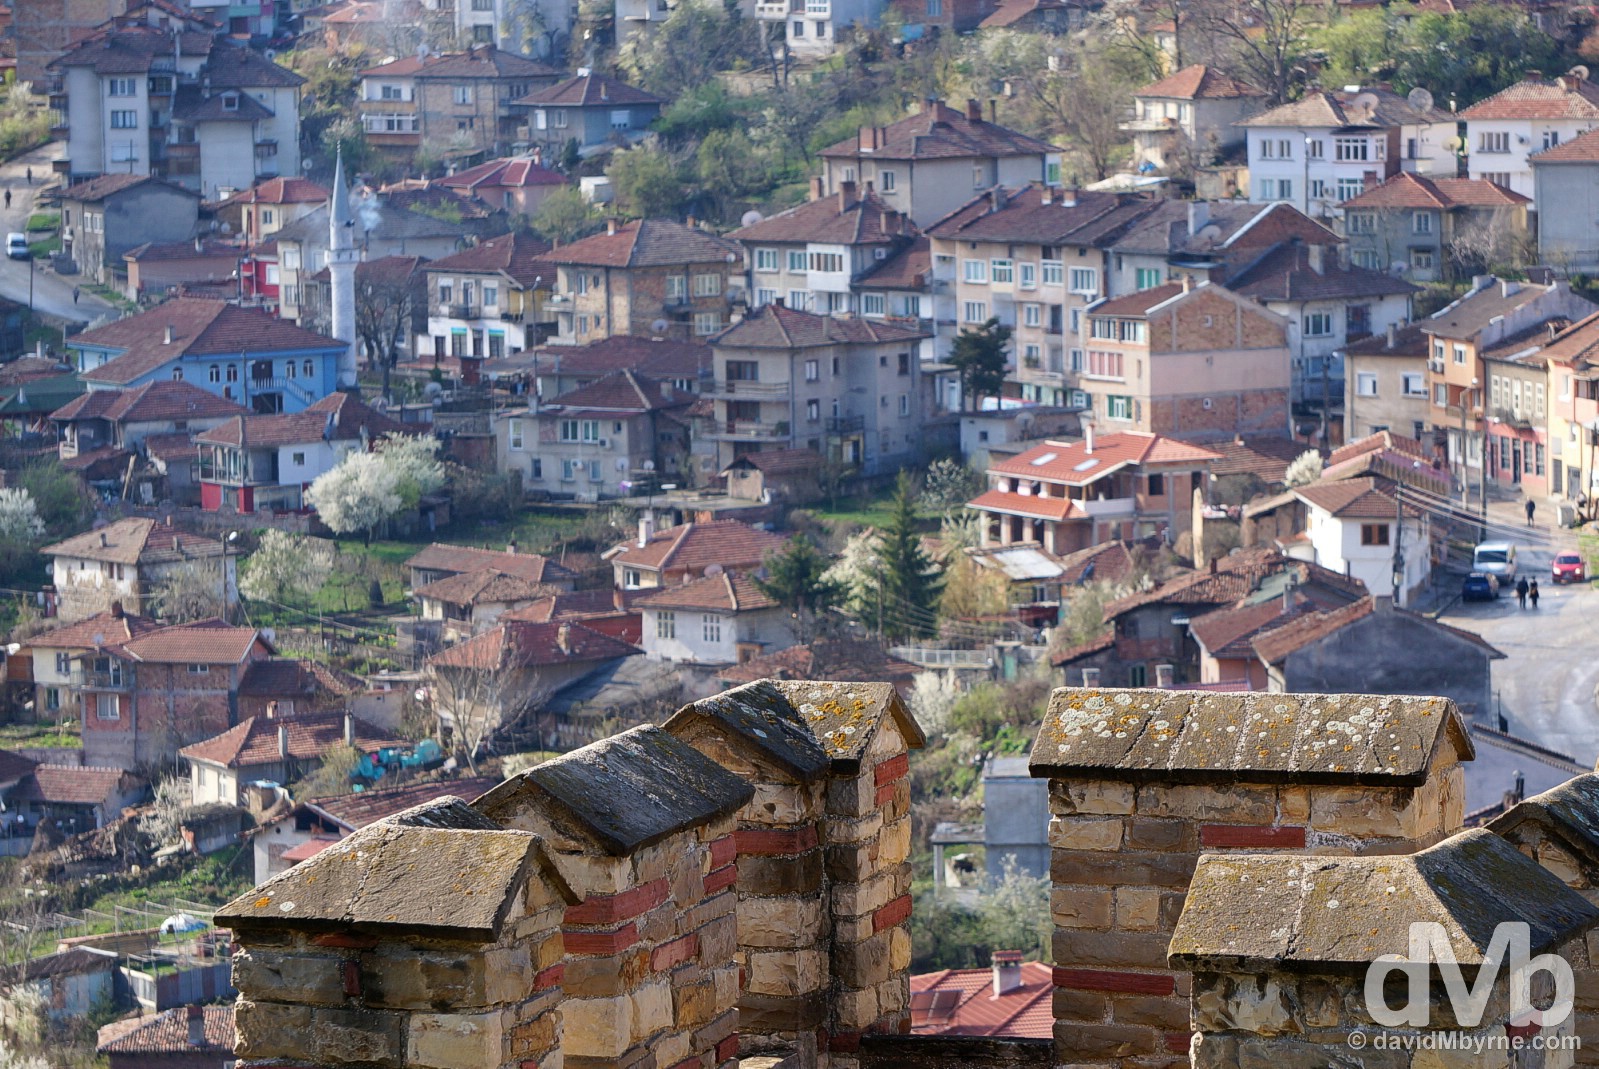 A portion of Veliko Tarnovo as seen from the walls of the Tsarevets Fortress. Veliko Tarnovo, Bulgaria. March 31, 2015.